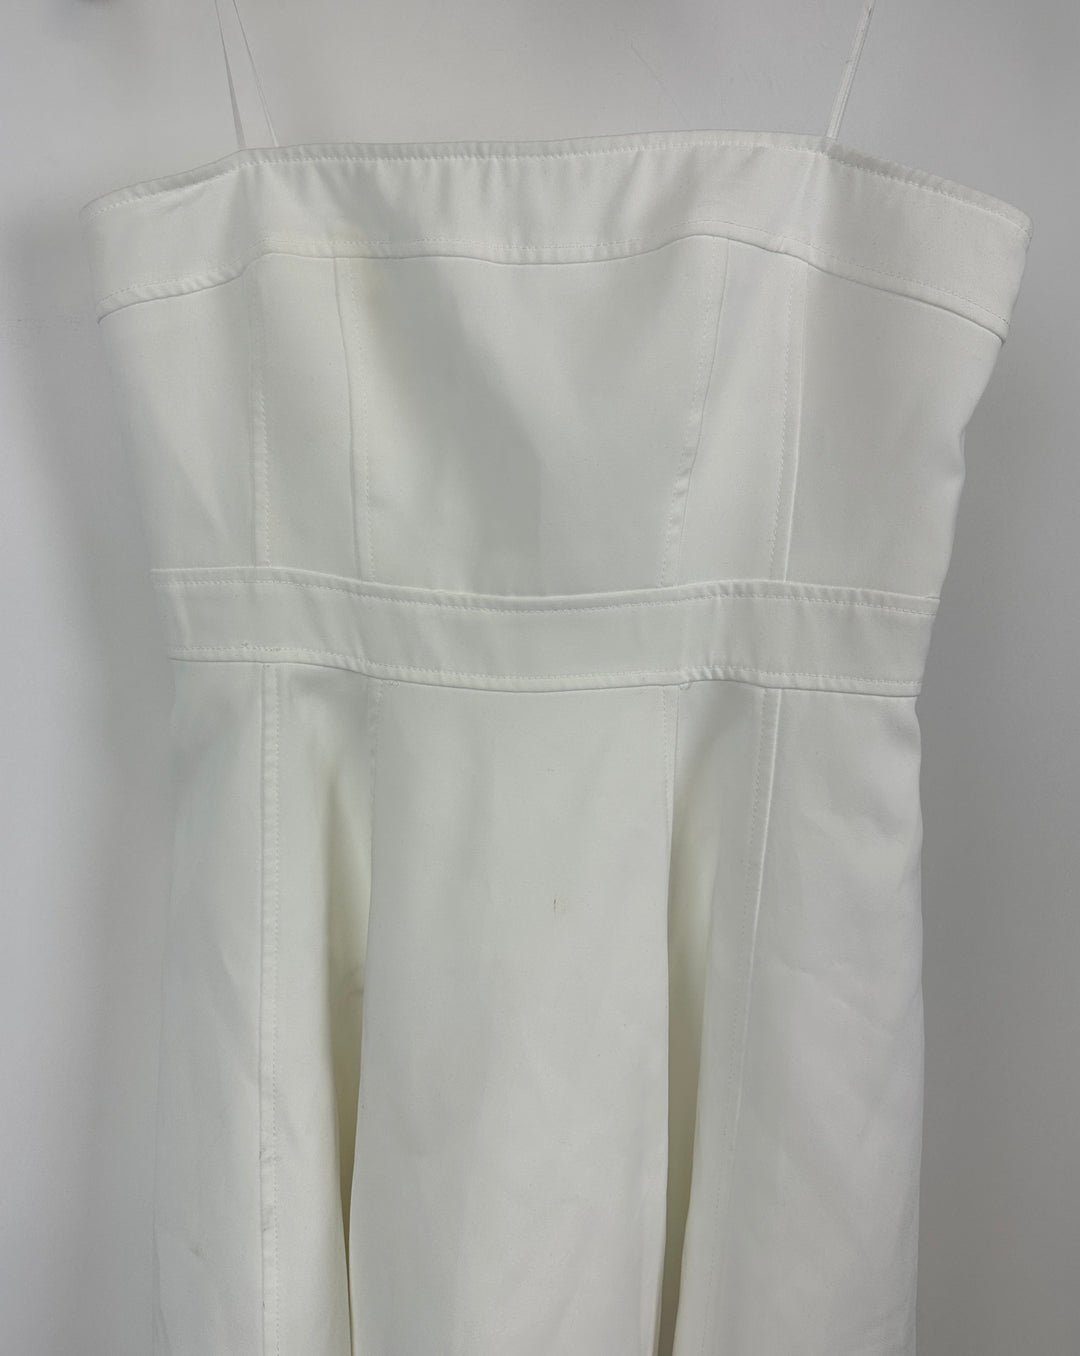 White Strapless Dress - Size 4-6